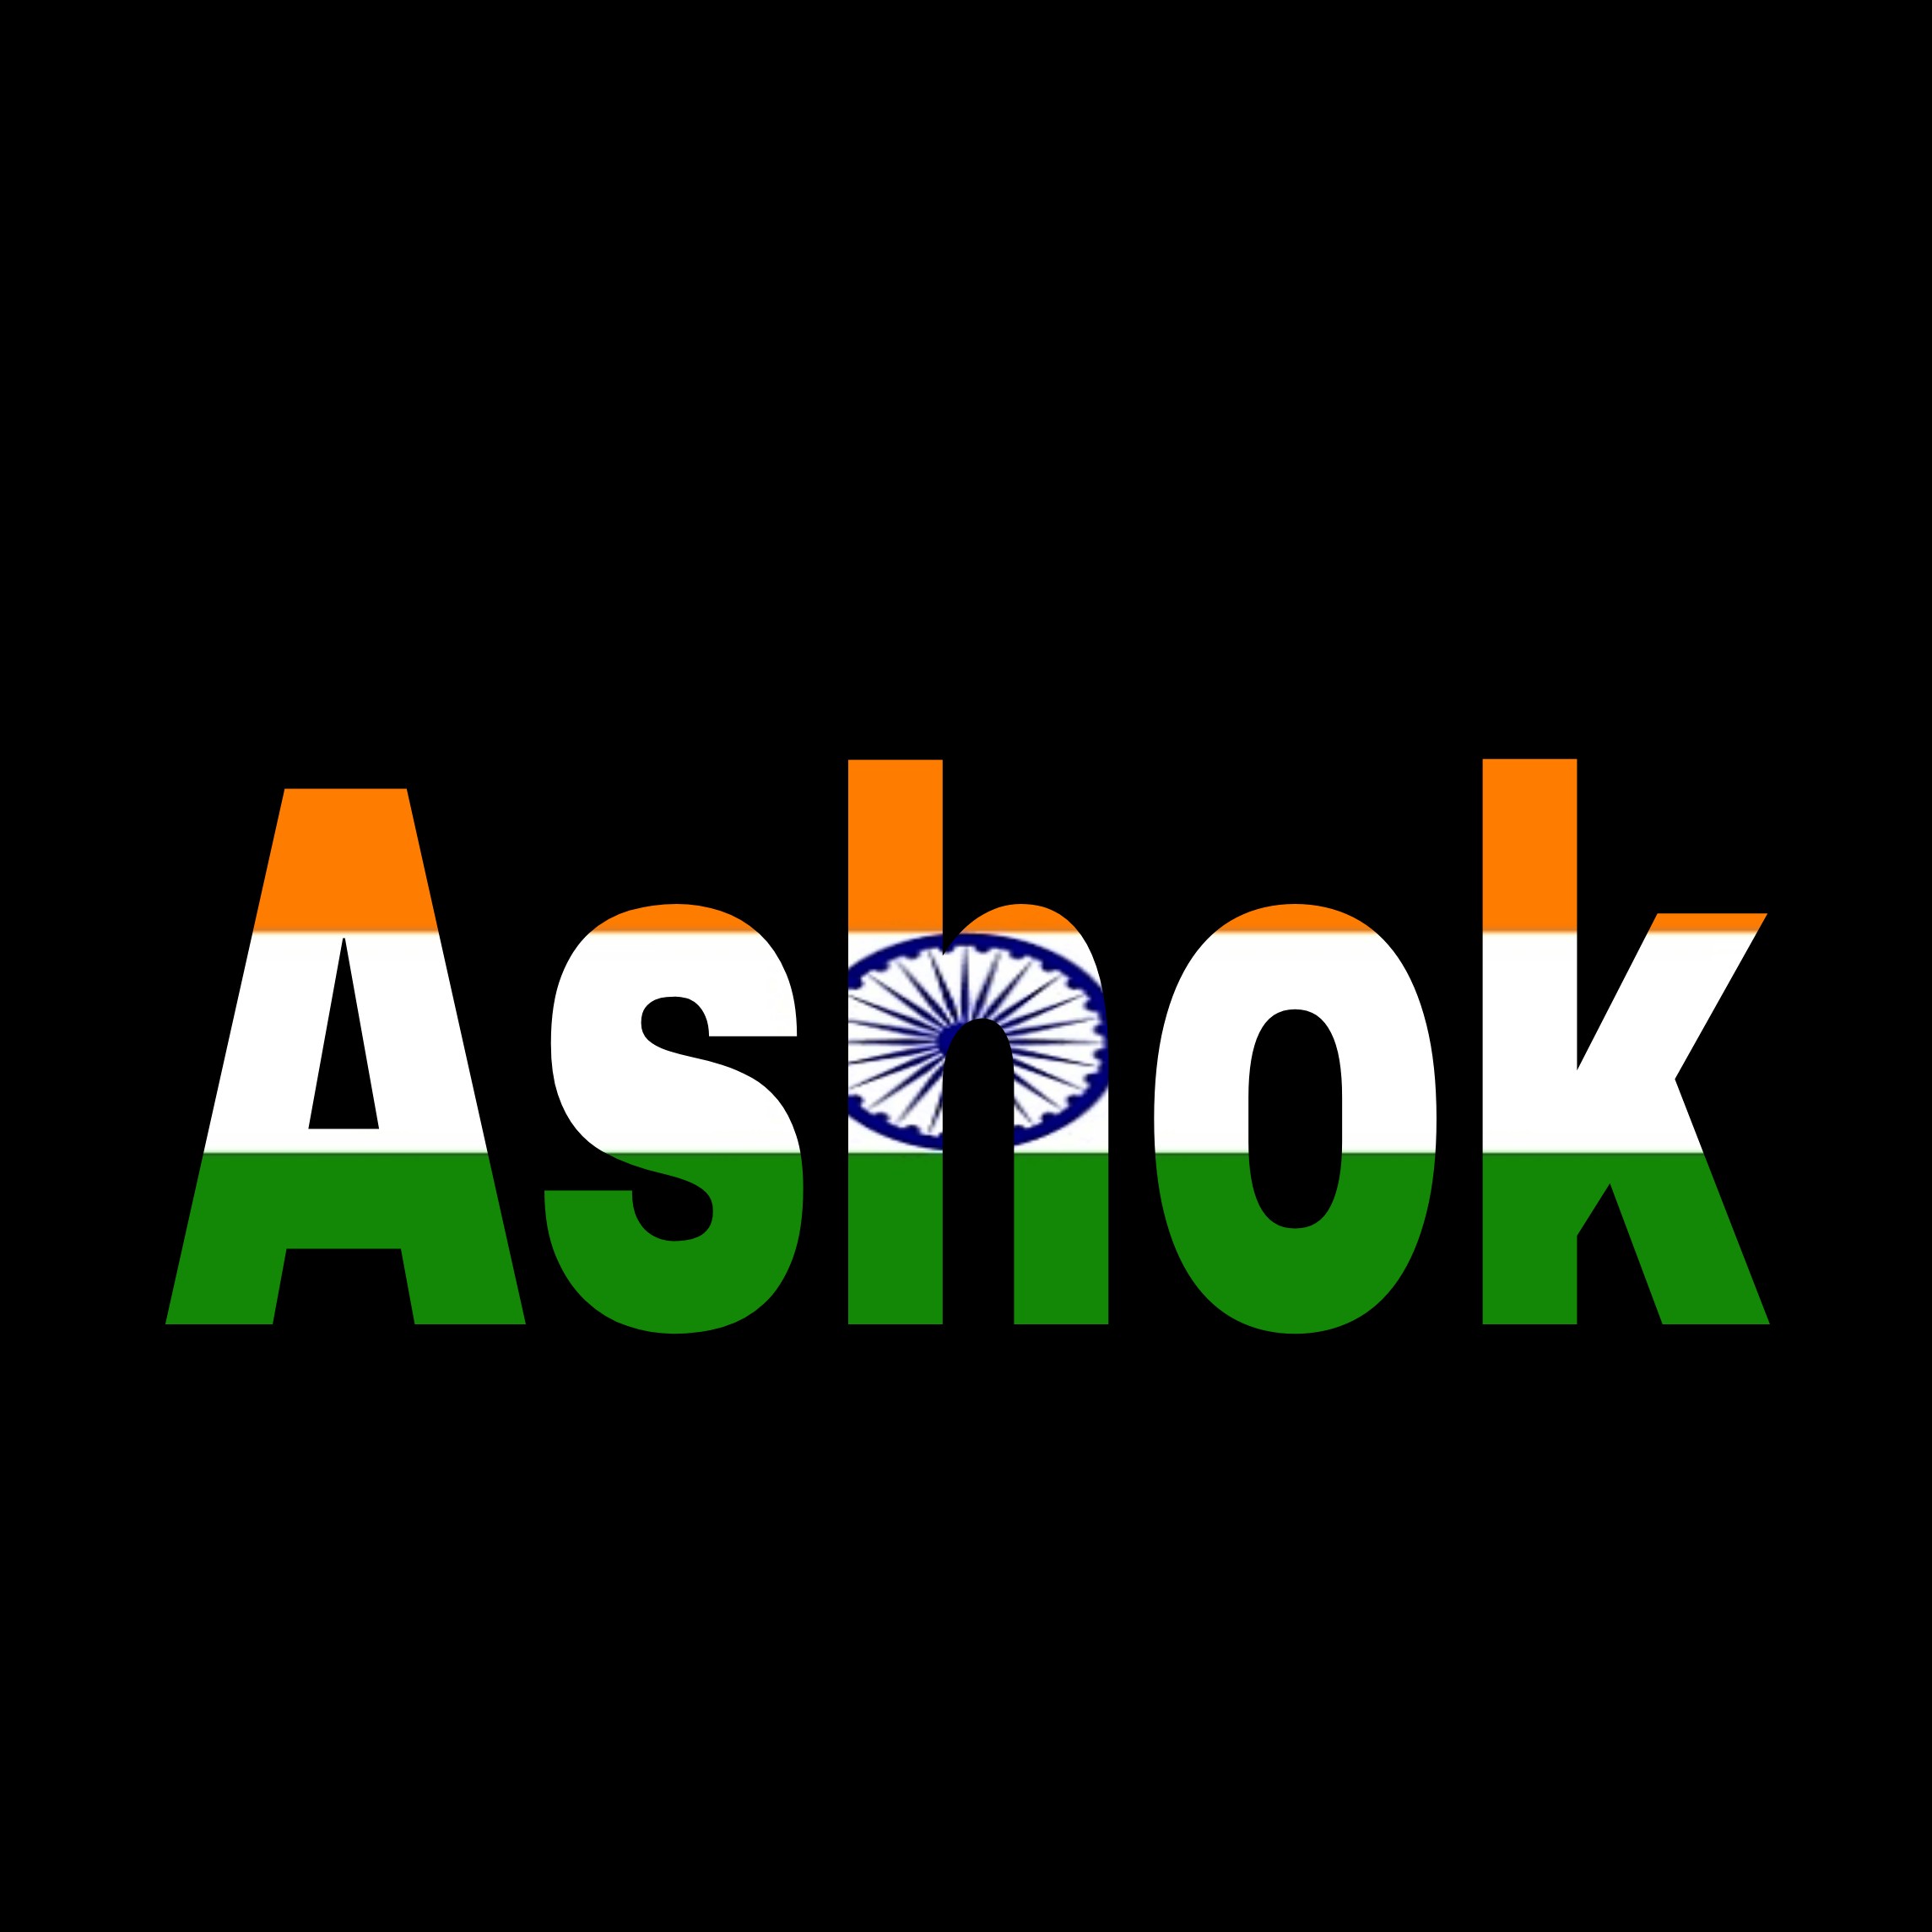 Ashok Name Image Hd Download - 2289x2289 Wallpaper 